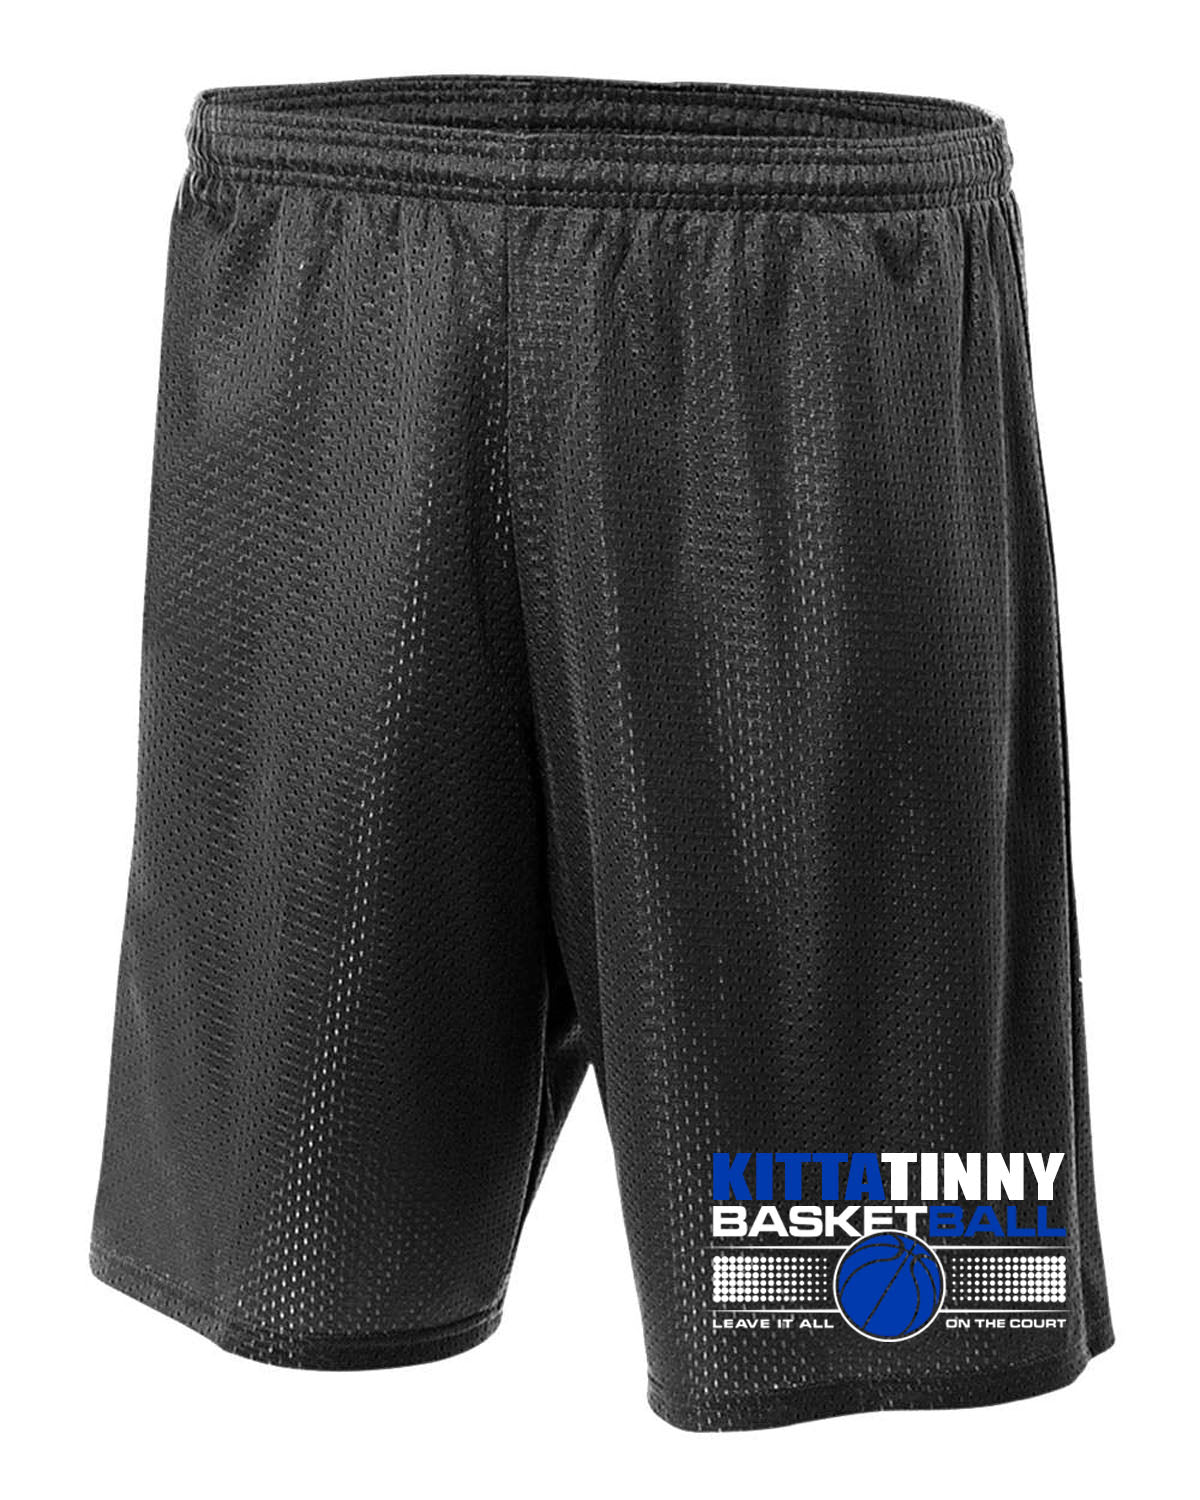 Kittatinny Basketball Design 1 Mesh Shorts